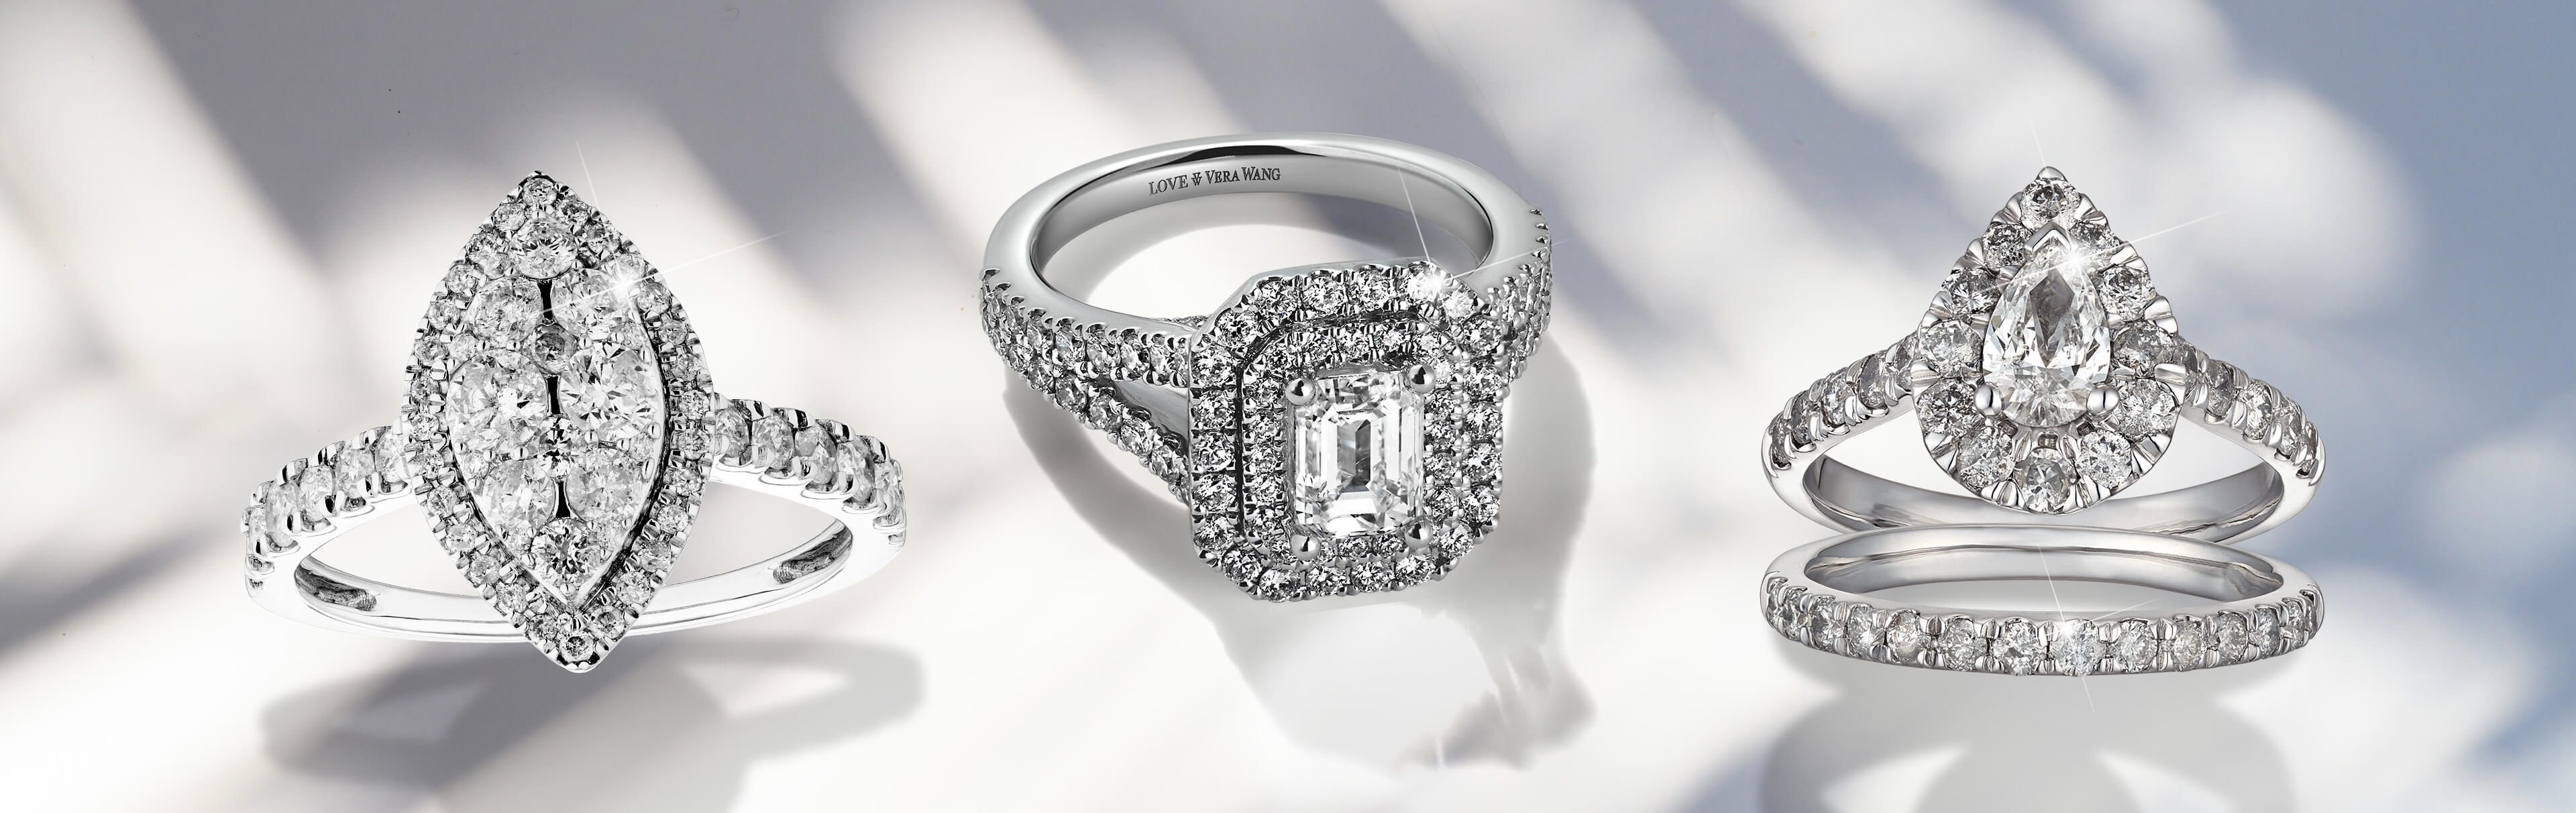 Diamond Right Hand Rings - Rings, Jewelry | Kohl's